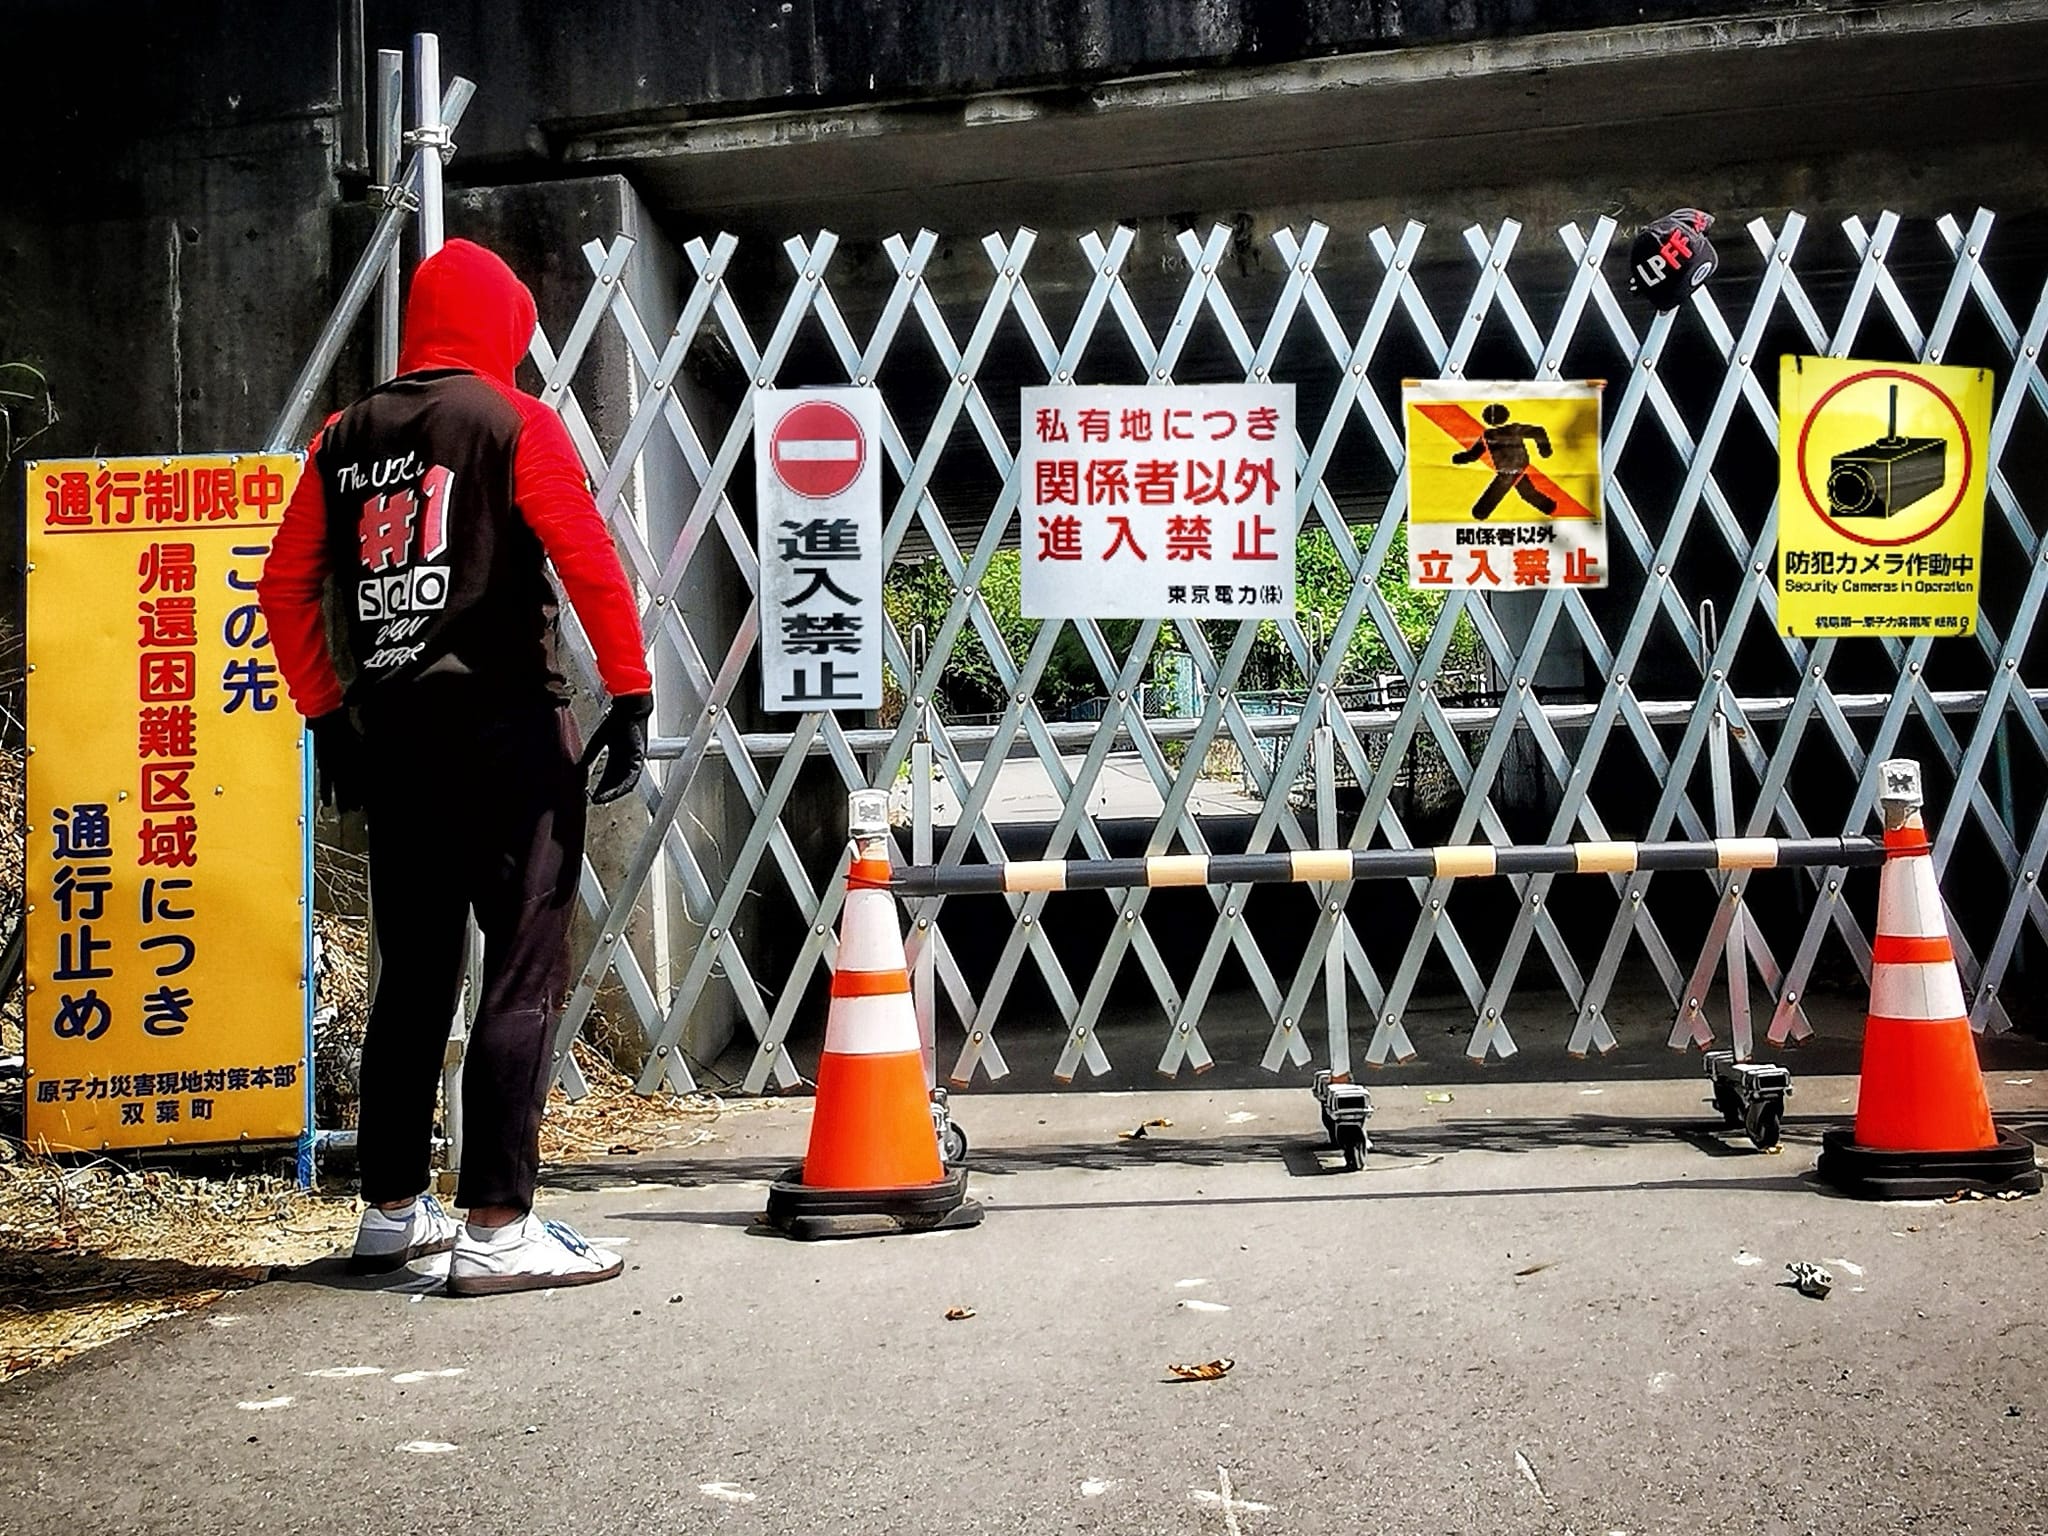 Matt outside the Red Zone, Fukushima, Japan